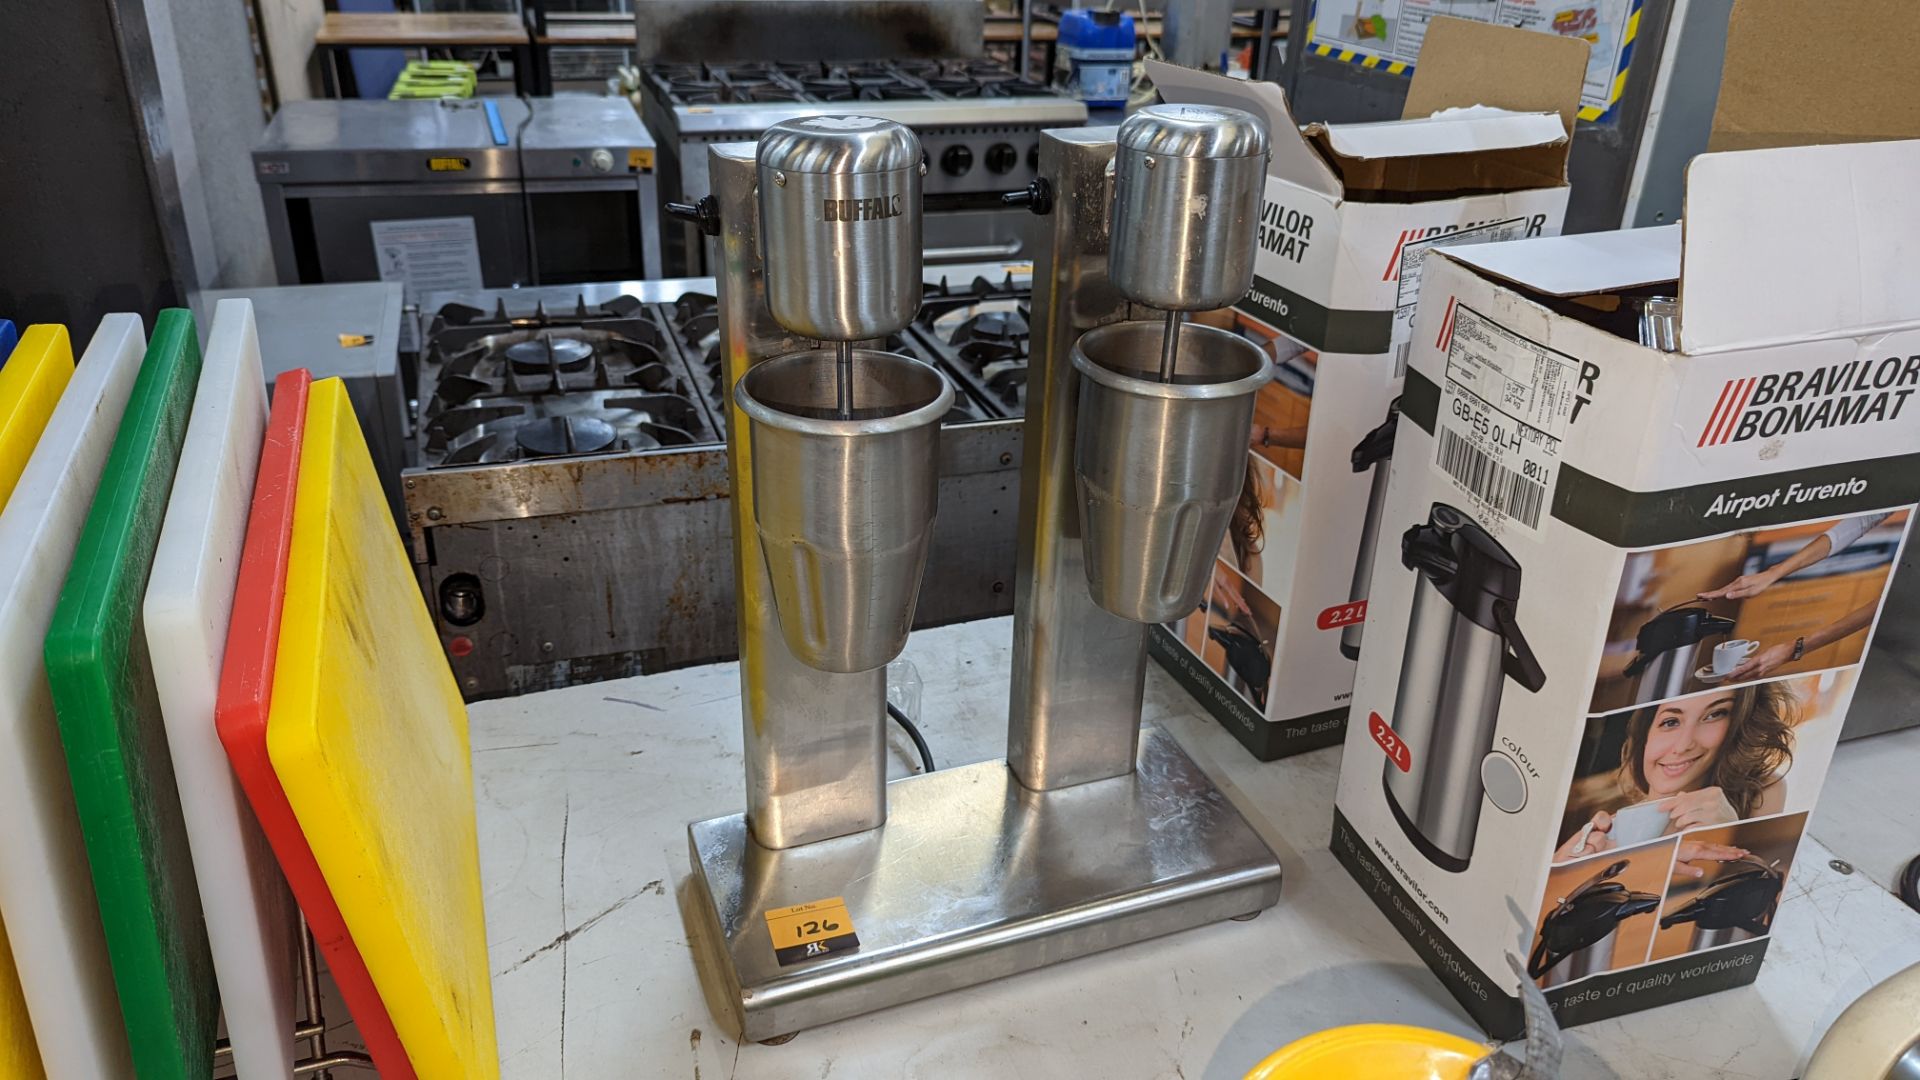 Buffalo stainless steel twin magnetised milkshake maker - Image 3 of 5